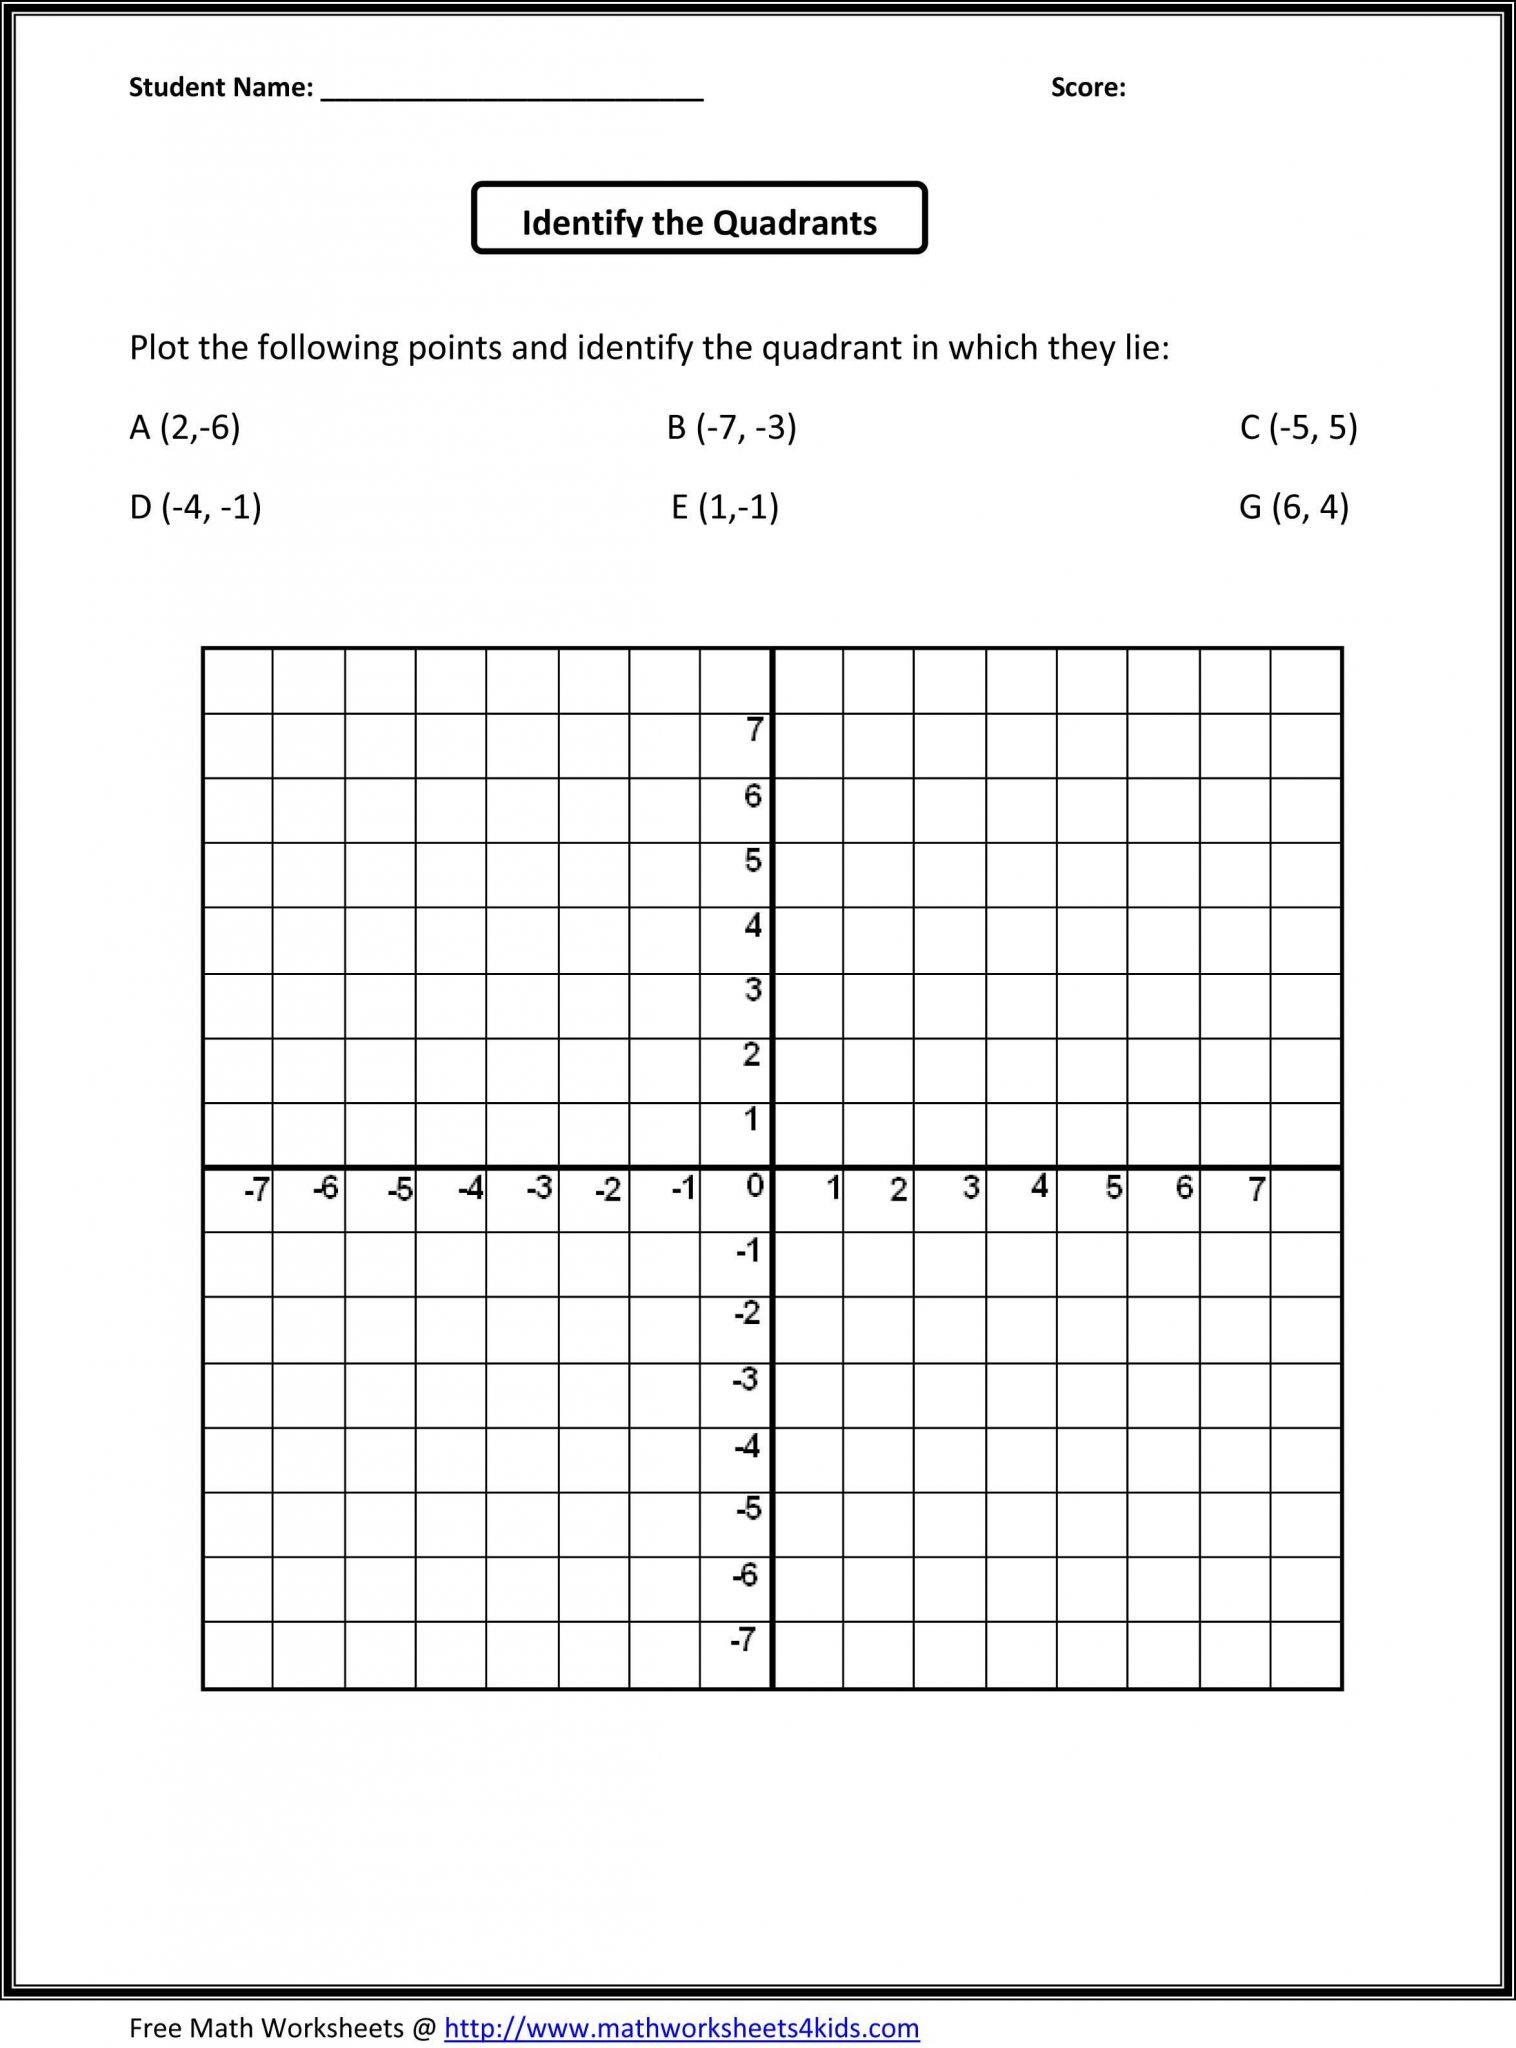 Elementary Teacher Worksheets together with 5th Grade Math Worksheet School Pinterest